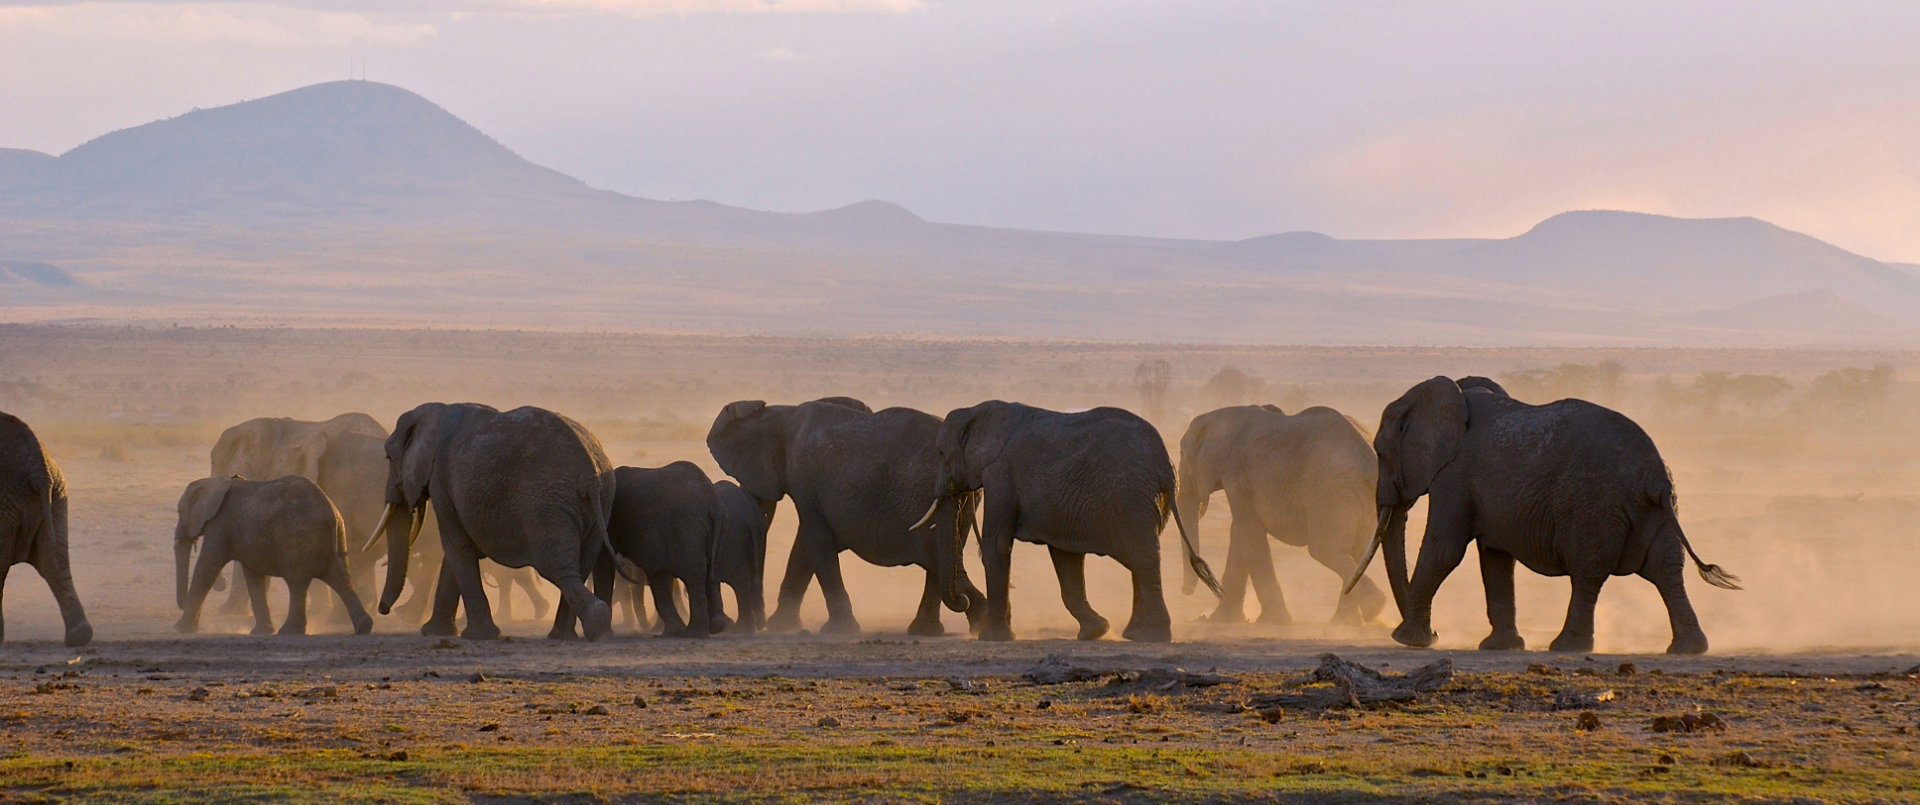 safaris-fred-homepage-safari-kenya-tanzanie